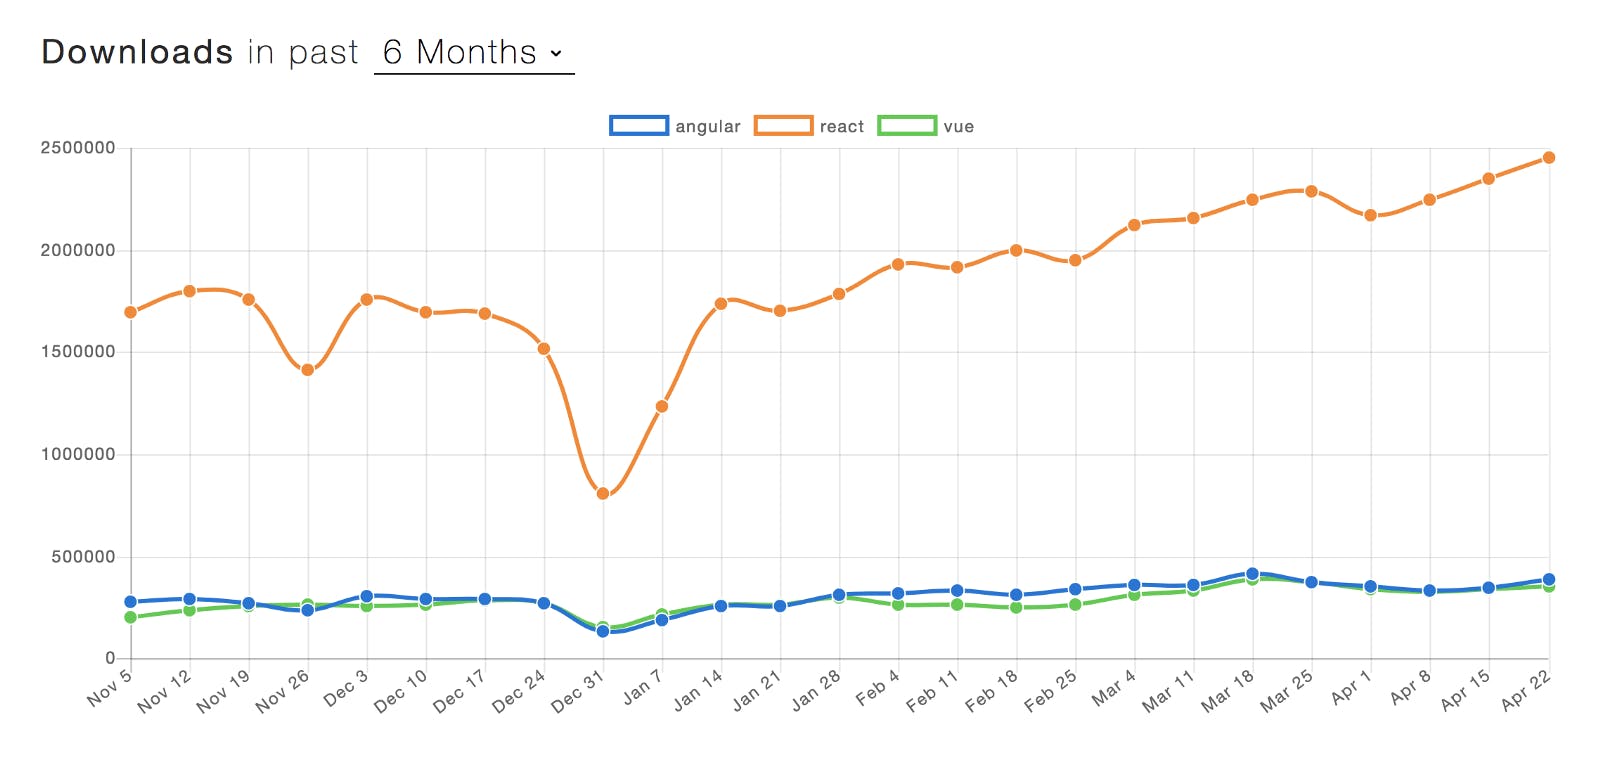 Libraries/framework comparison on NPM trend.